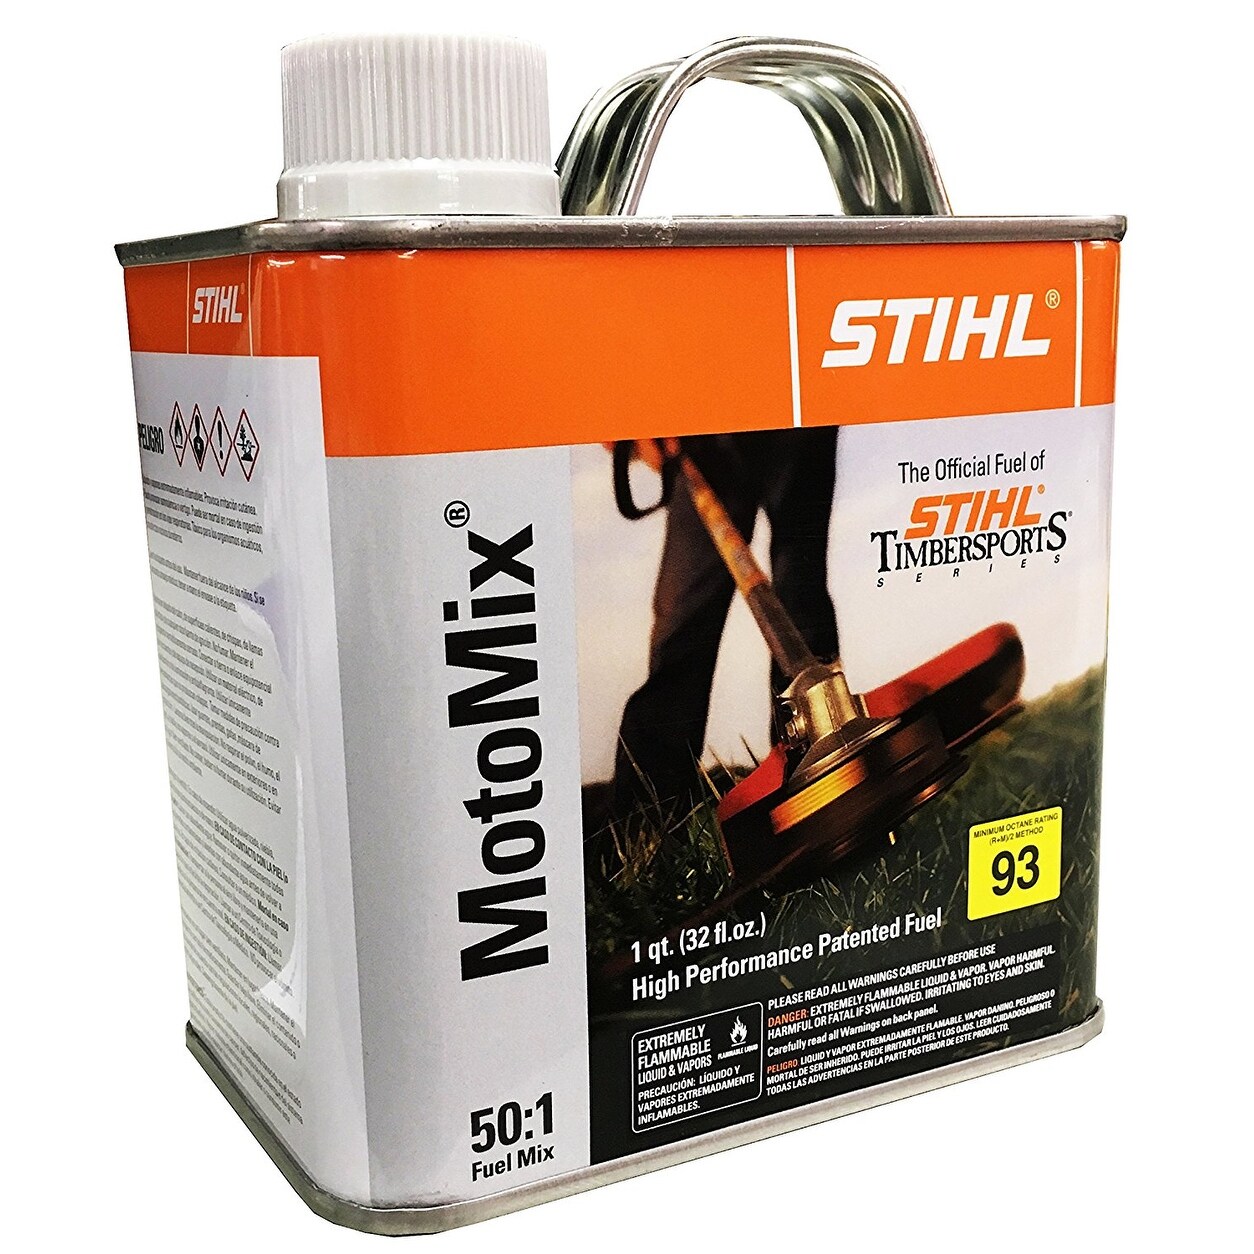 Stihl Motomix High Performance Premix Fuel 50:1 (2-Cycle Fuel)